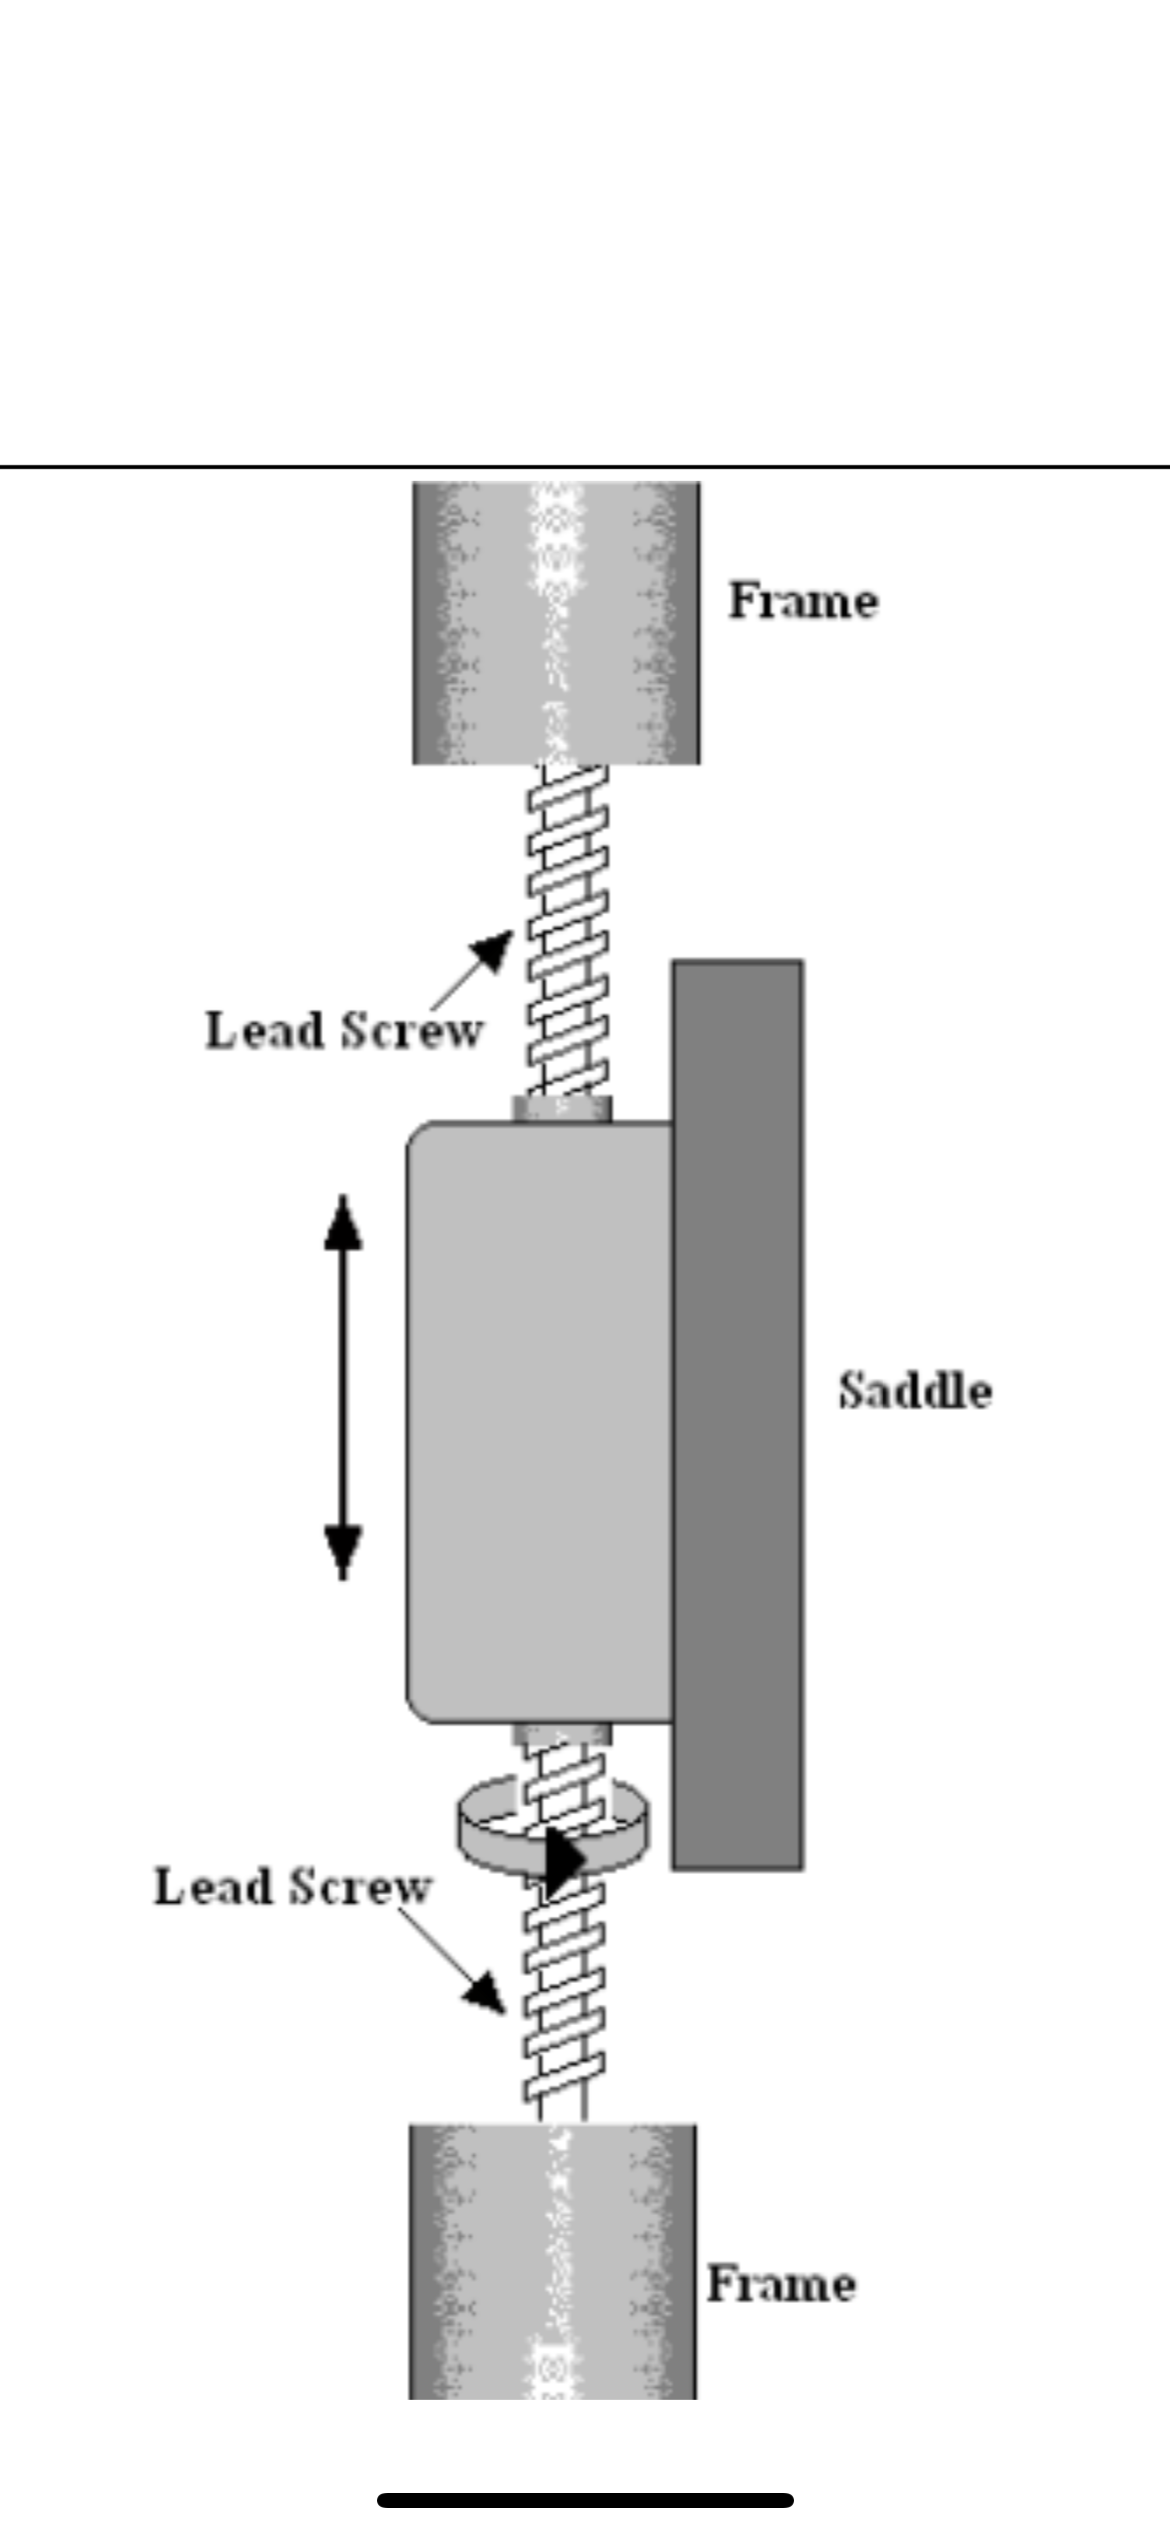 Lead Screw
Lead Screw
Frame
Saddle
Frame